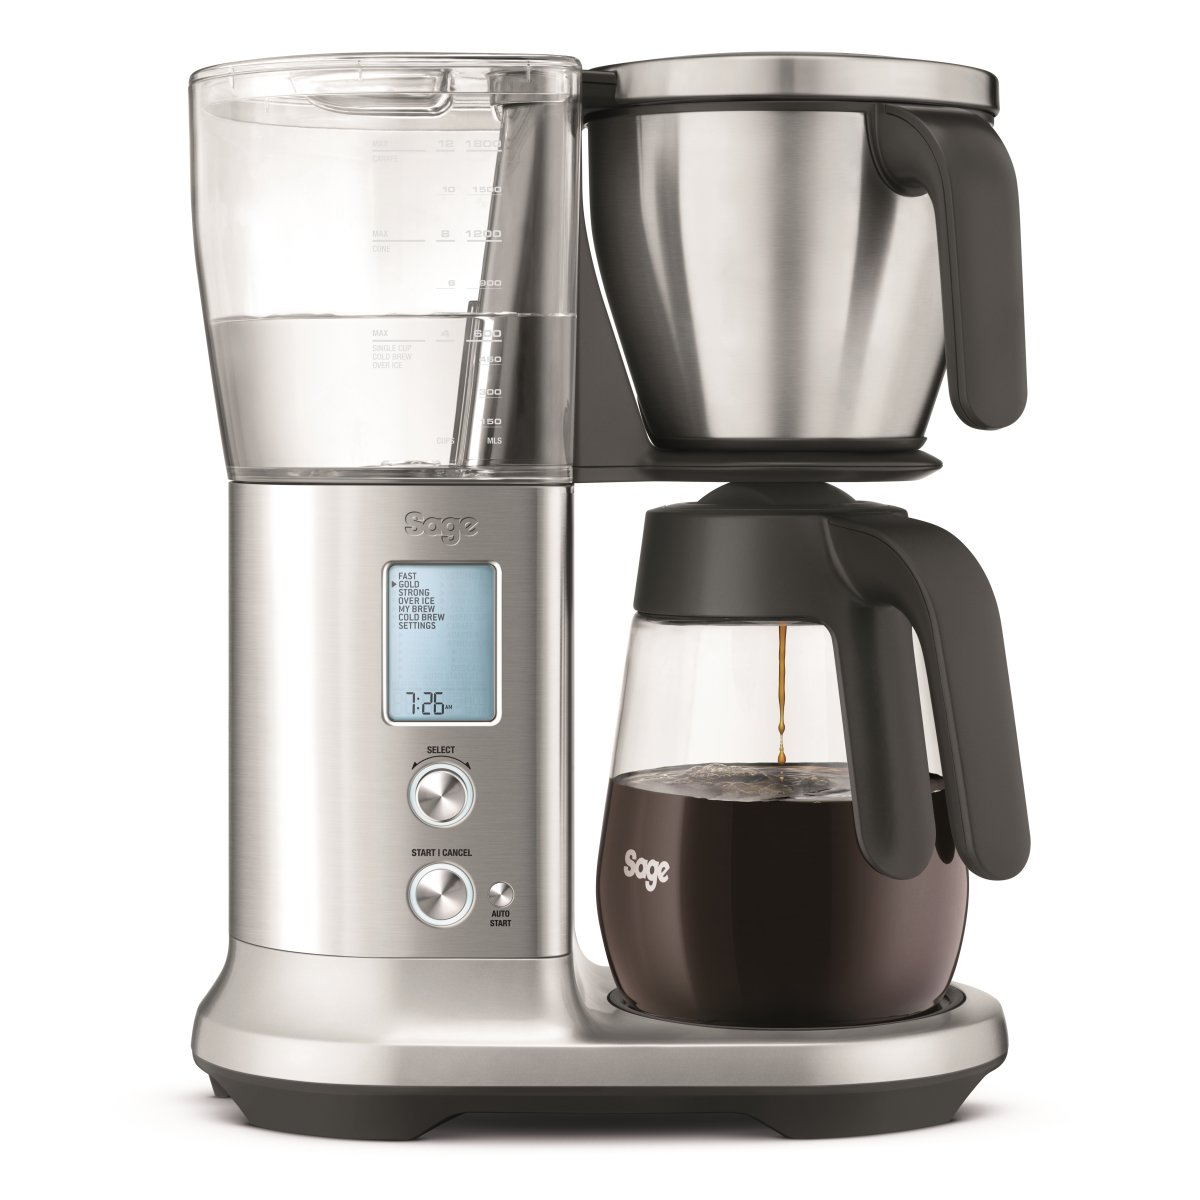 Med vilje Korrekt forum Witt Sage SDC400 Kaffemaskine med glaskande - køb på lomax.dk | Lomax